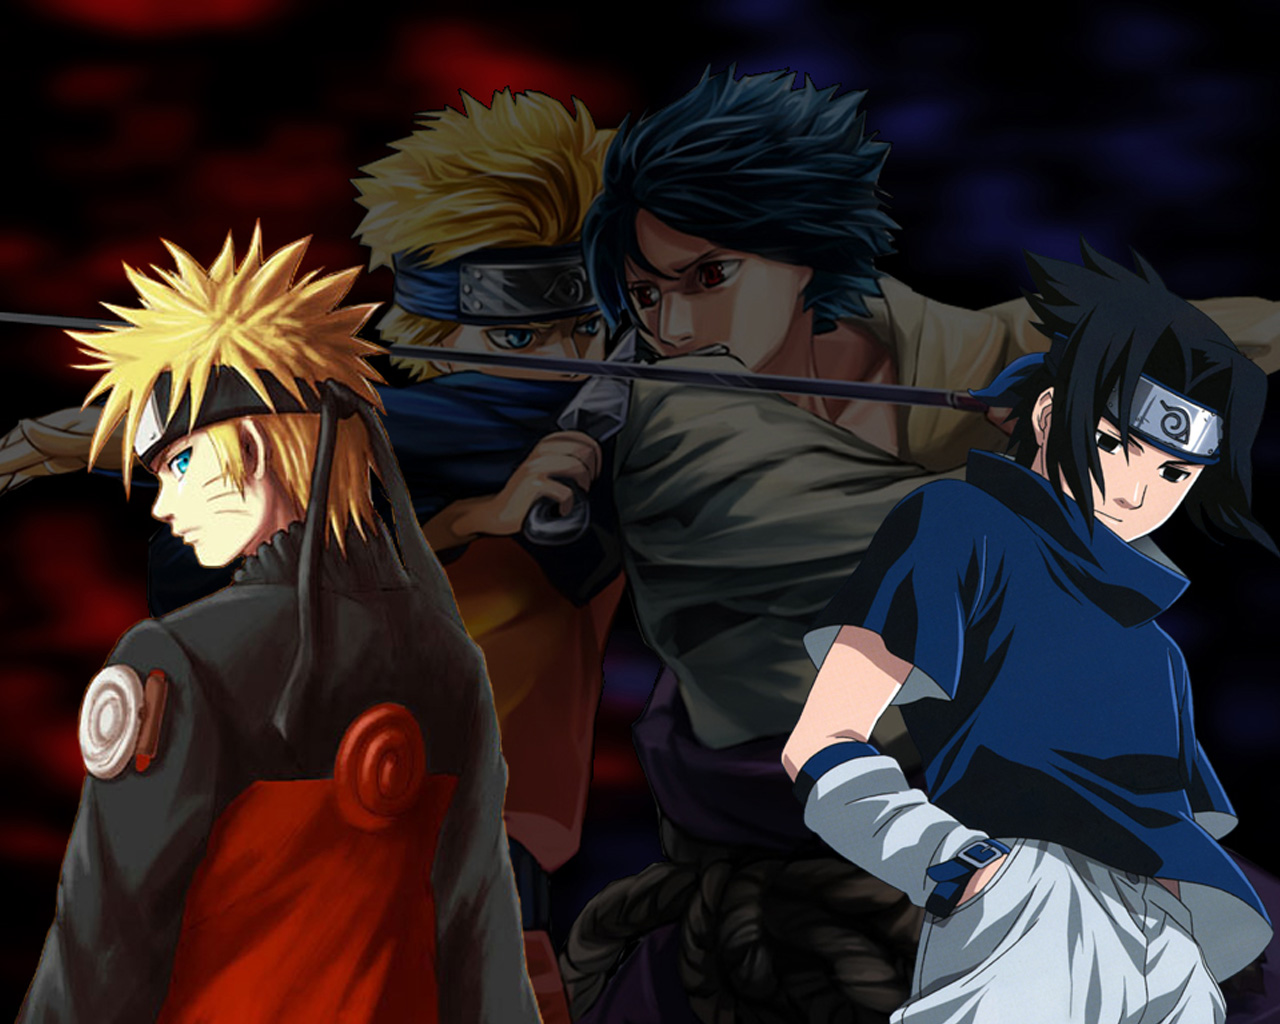 Gallery For Gt Sasuke Vs Naruto Wallpaper